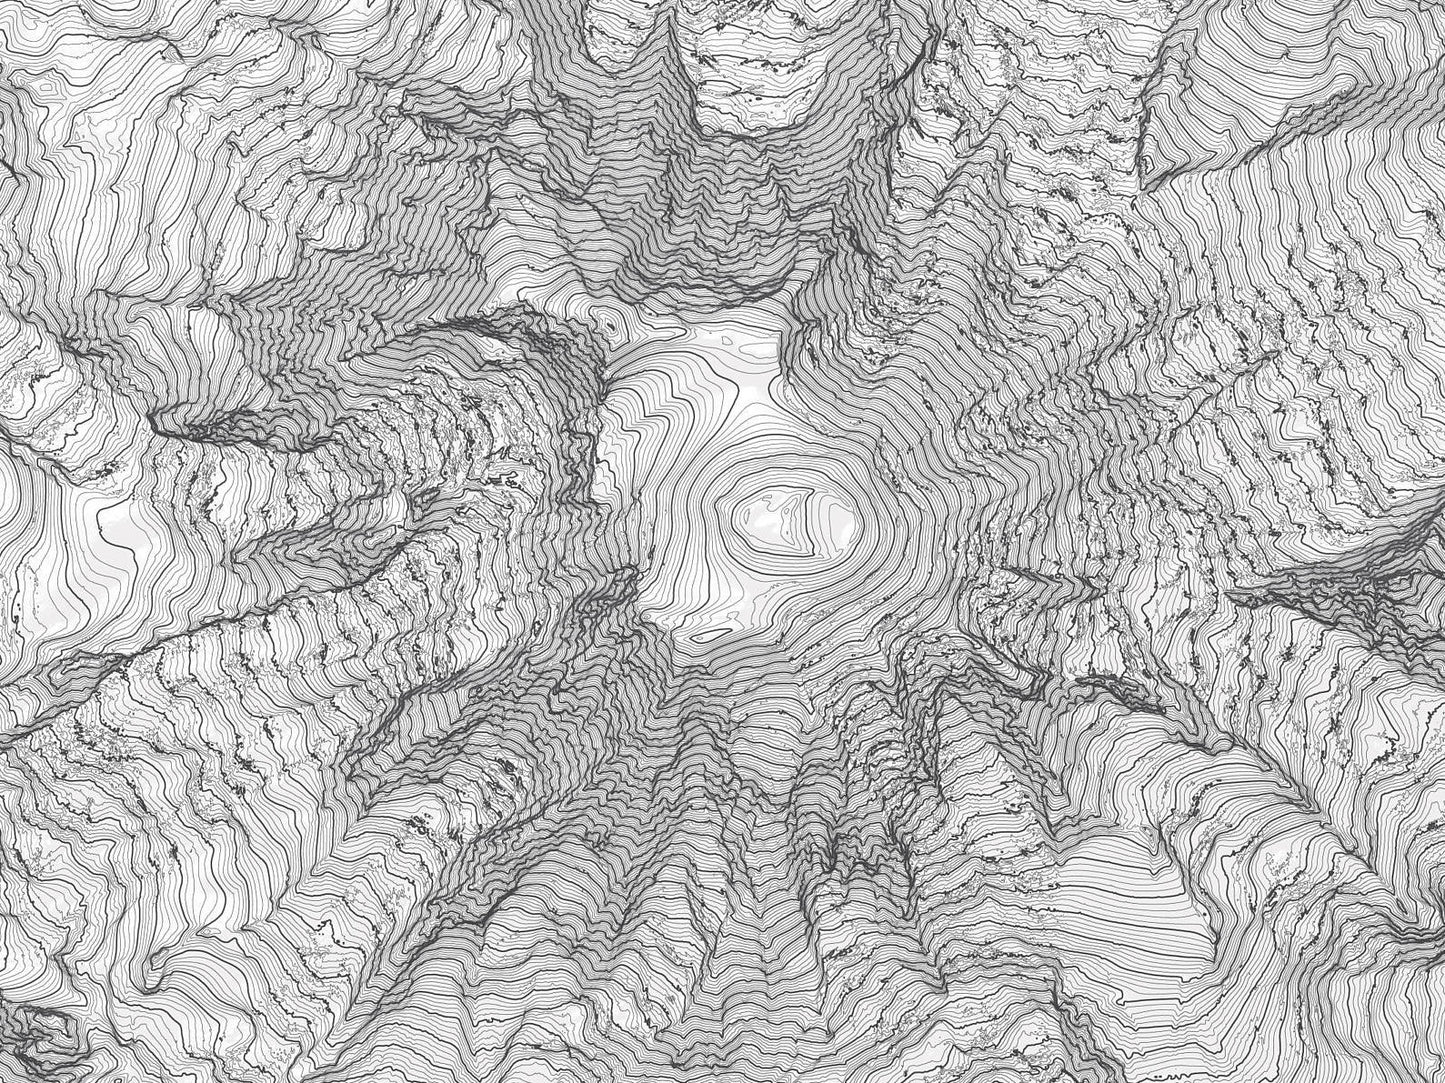 Mt Rainier, Washington, Elevation Topography Print Wall Art